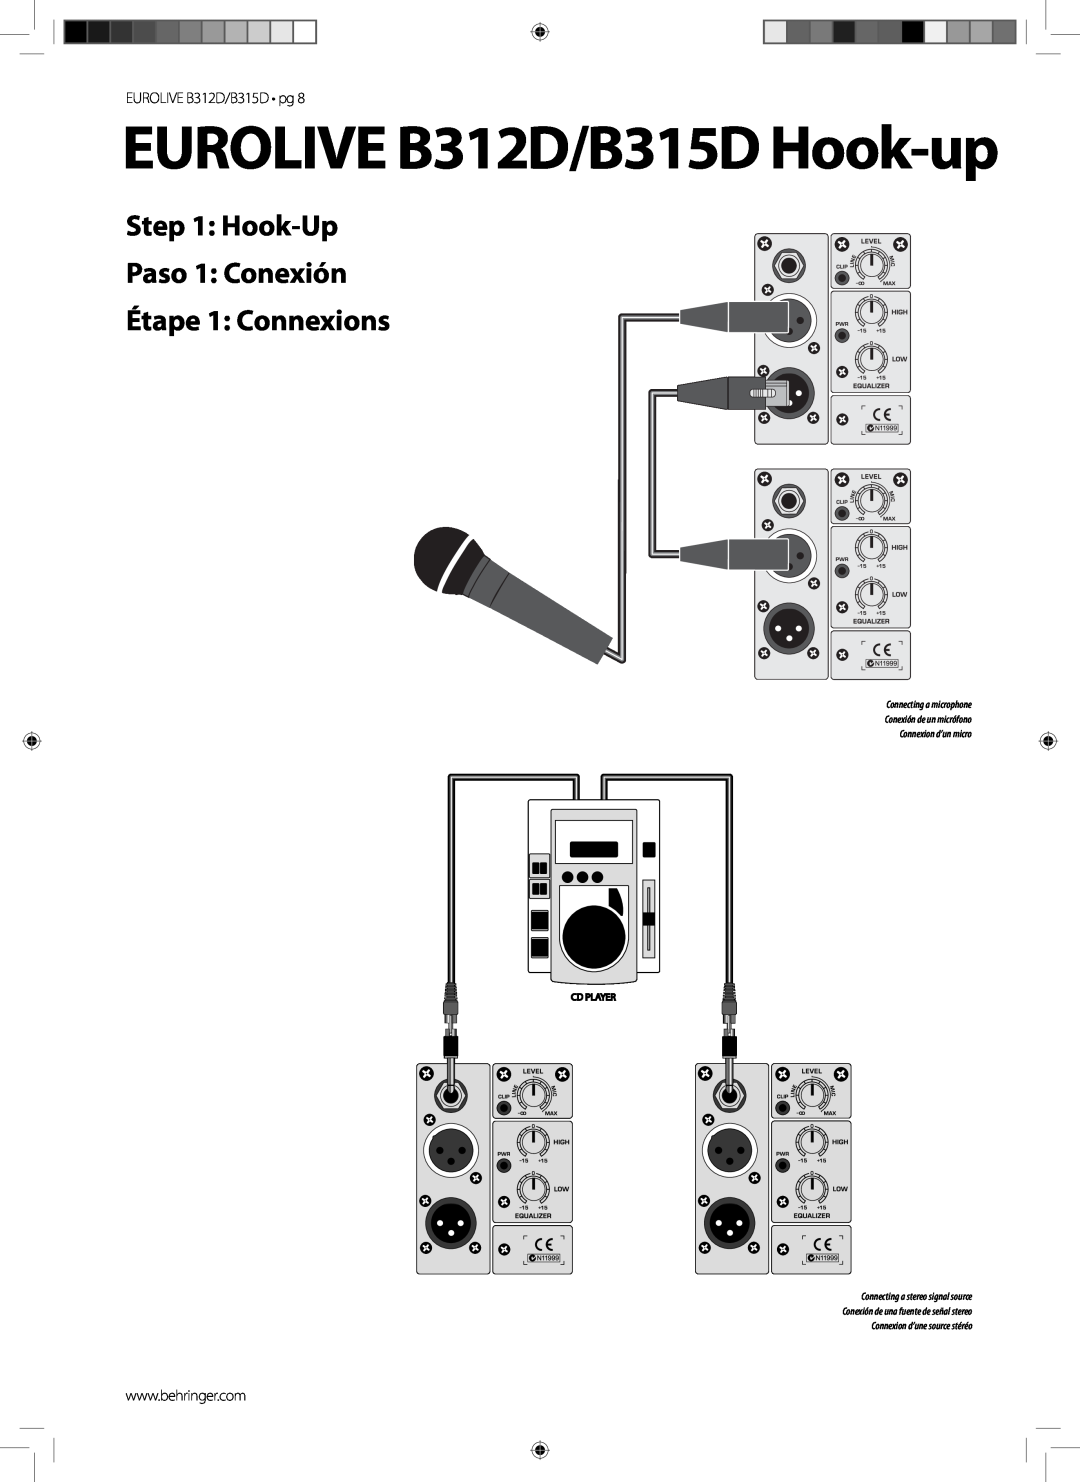 Behringer manual EUROLIVE B312D/B315D Hook-up, Hook-Up Paso 1: Conexión, Étape 1 Connexions, Connexion d’un micro 